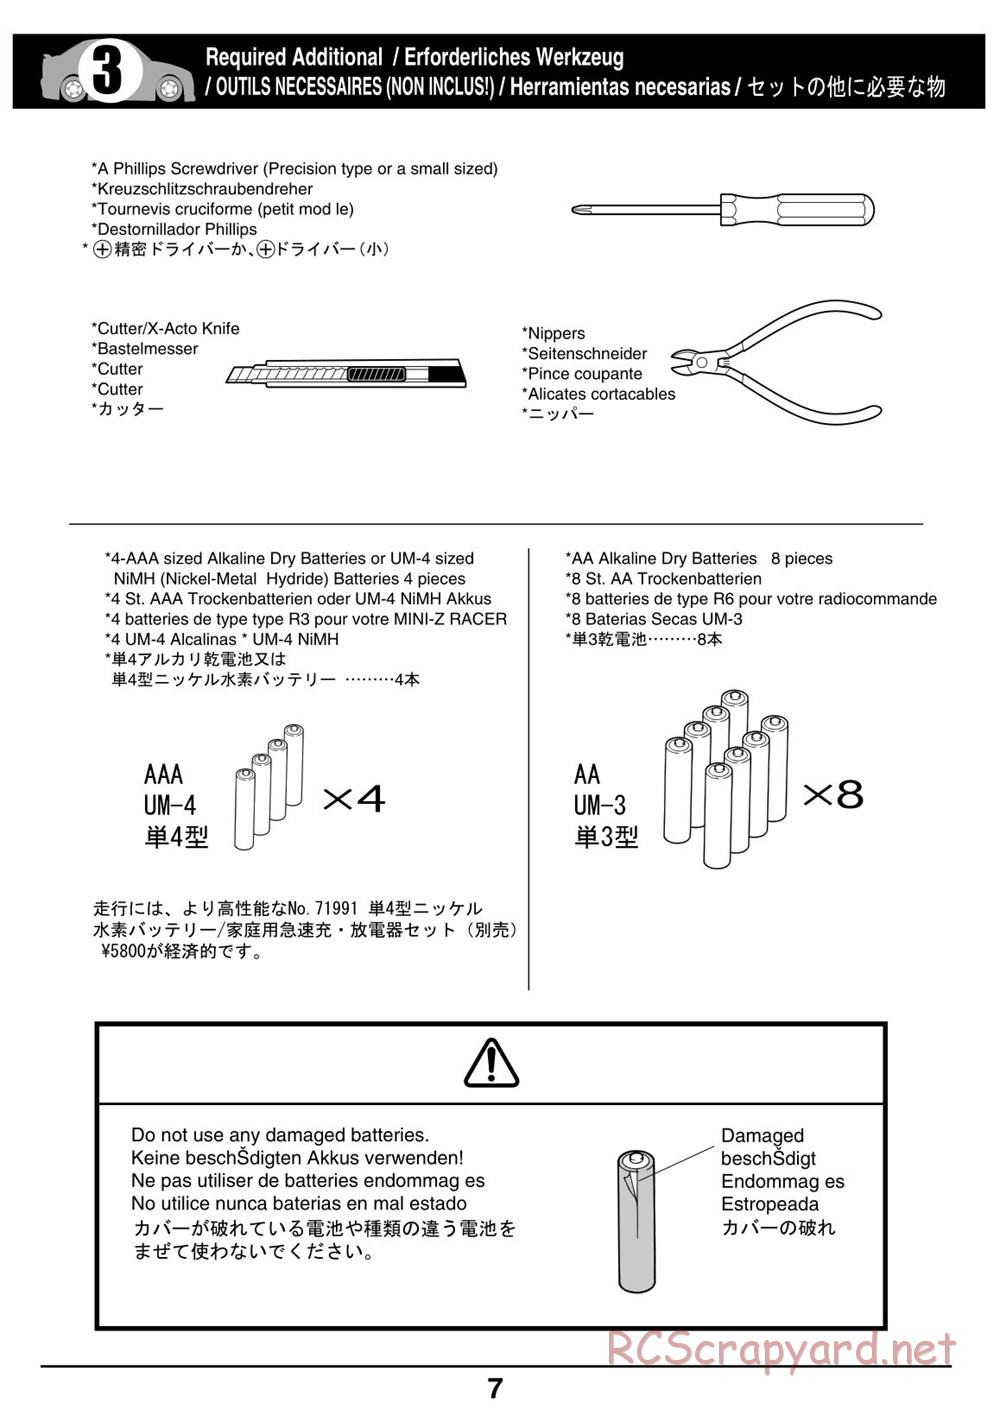 Kyosho - Mini-Z Racer MR02 - Manual - Page 7